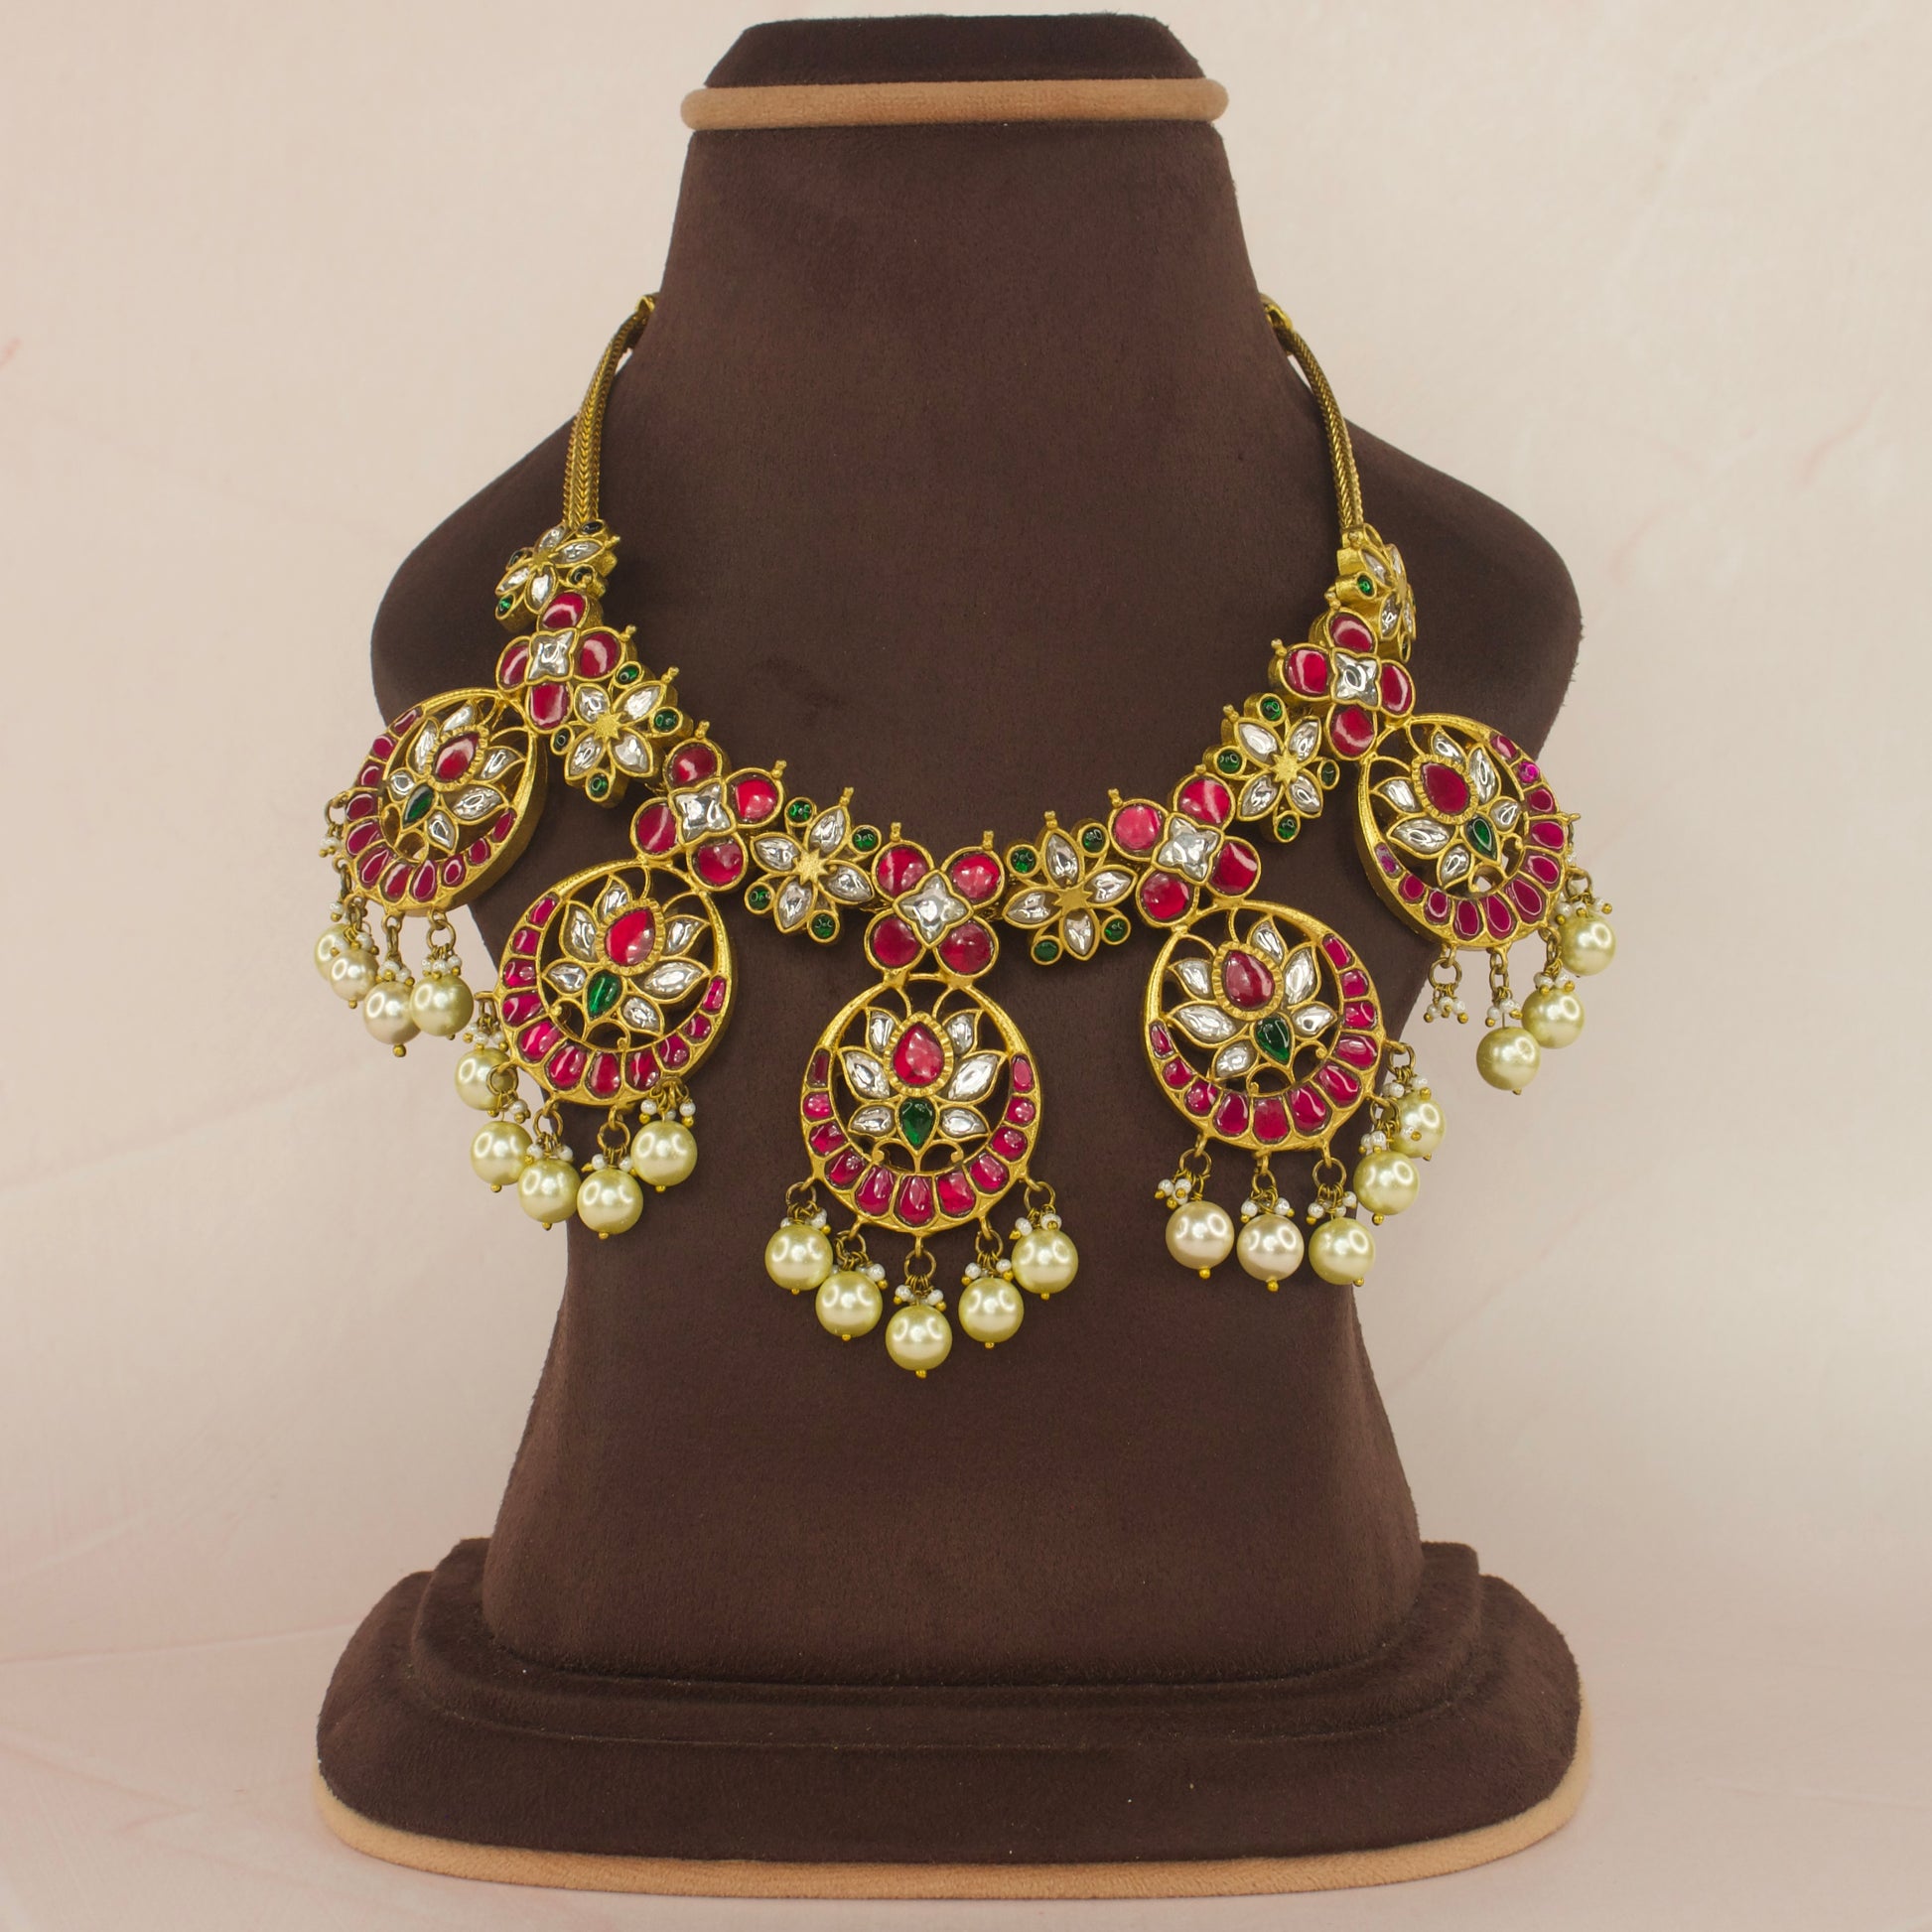 Regal Jadau Kundan Bottumala Necklace with Pearls and Floral Motifs with 22k gold platingThis product belongs to Jadau Kundan jewellery category